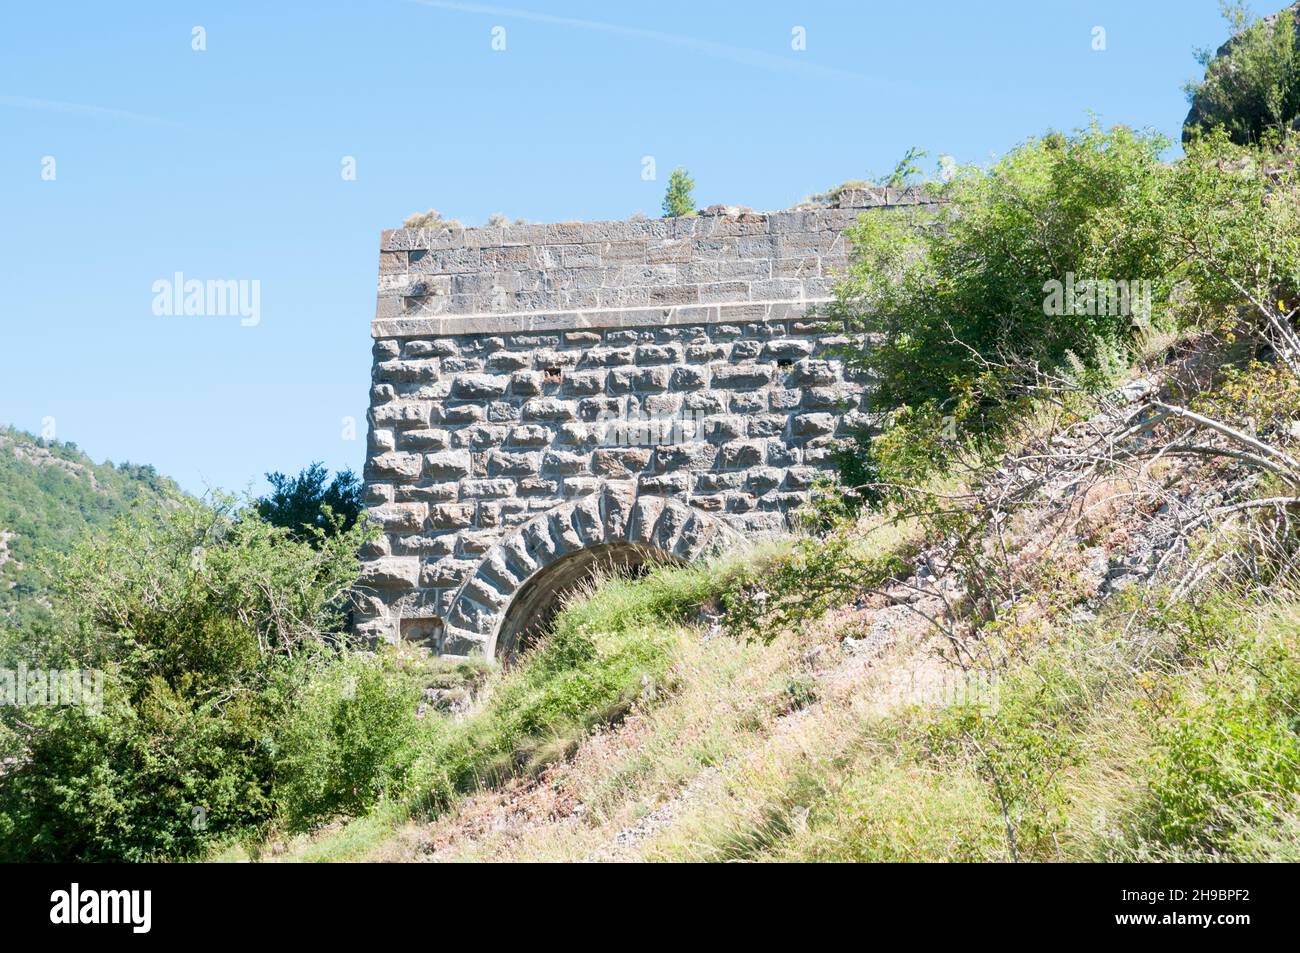 Fuerte de Sta Elena (The fort at Santa Elena), Pyrenees Mountains, Huesca province, Aragon, Spain Stock Photo